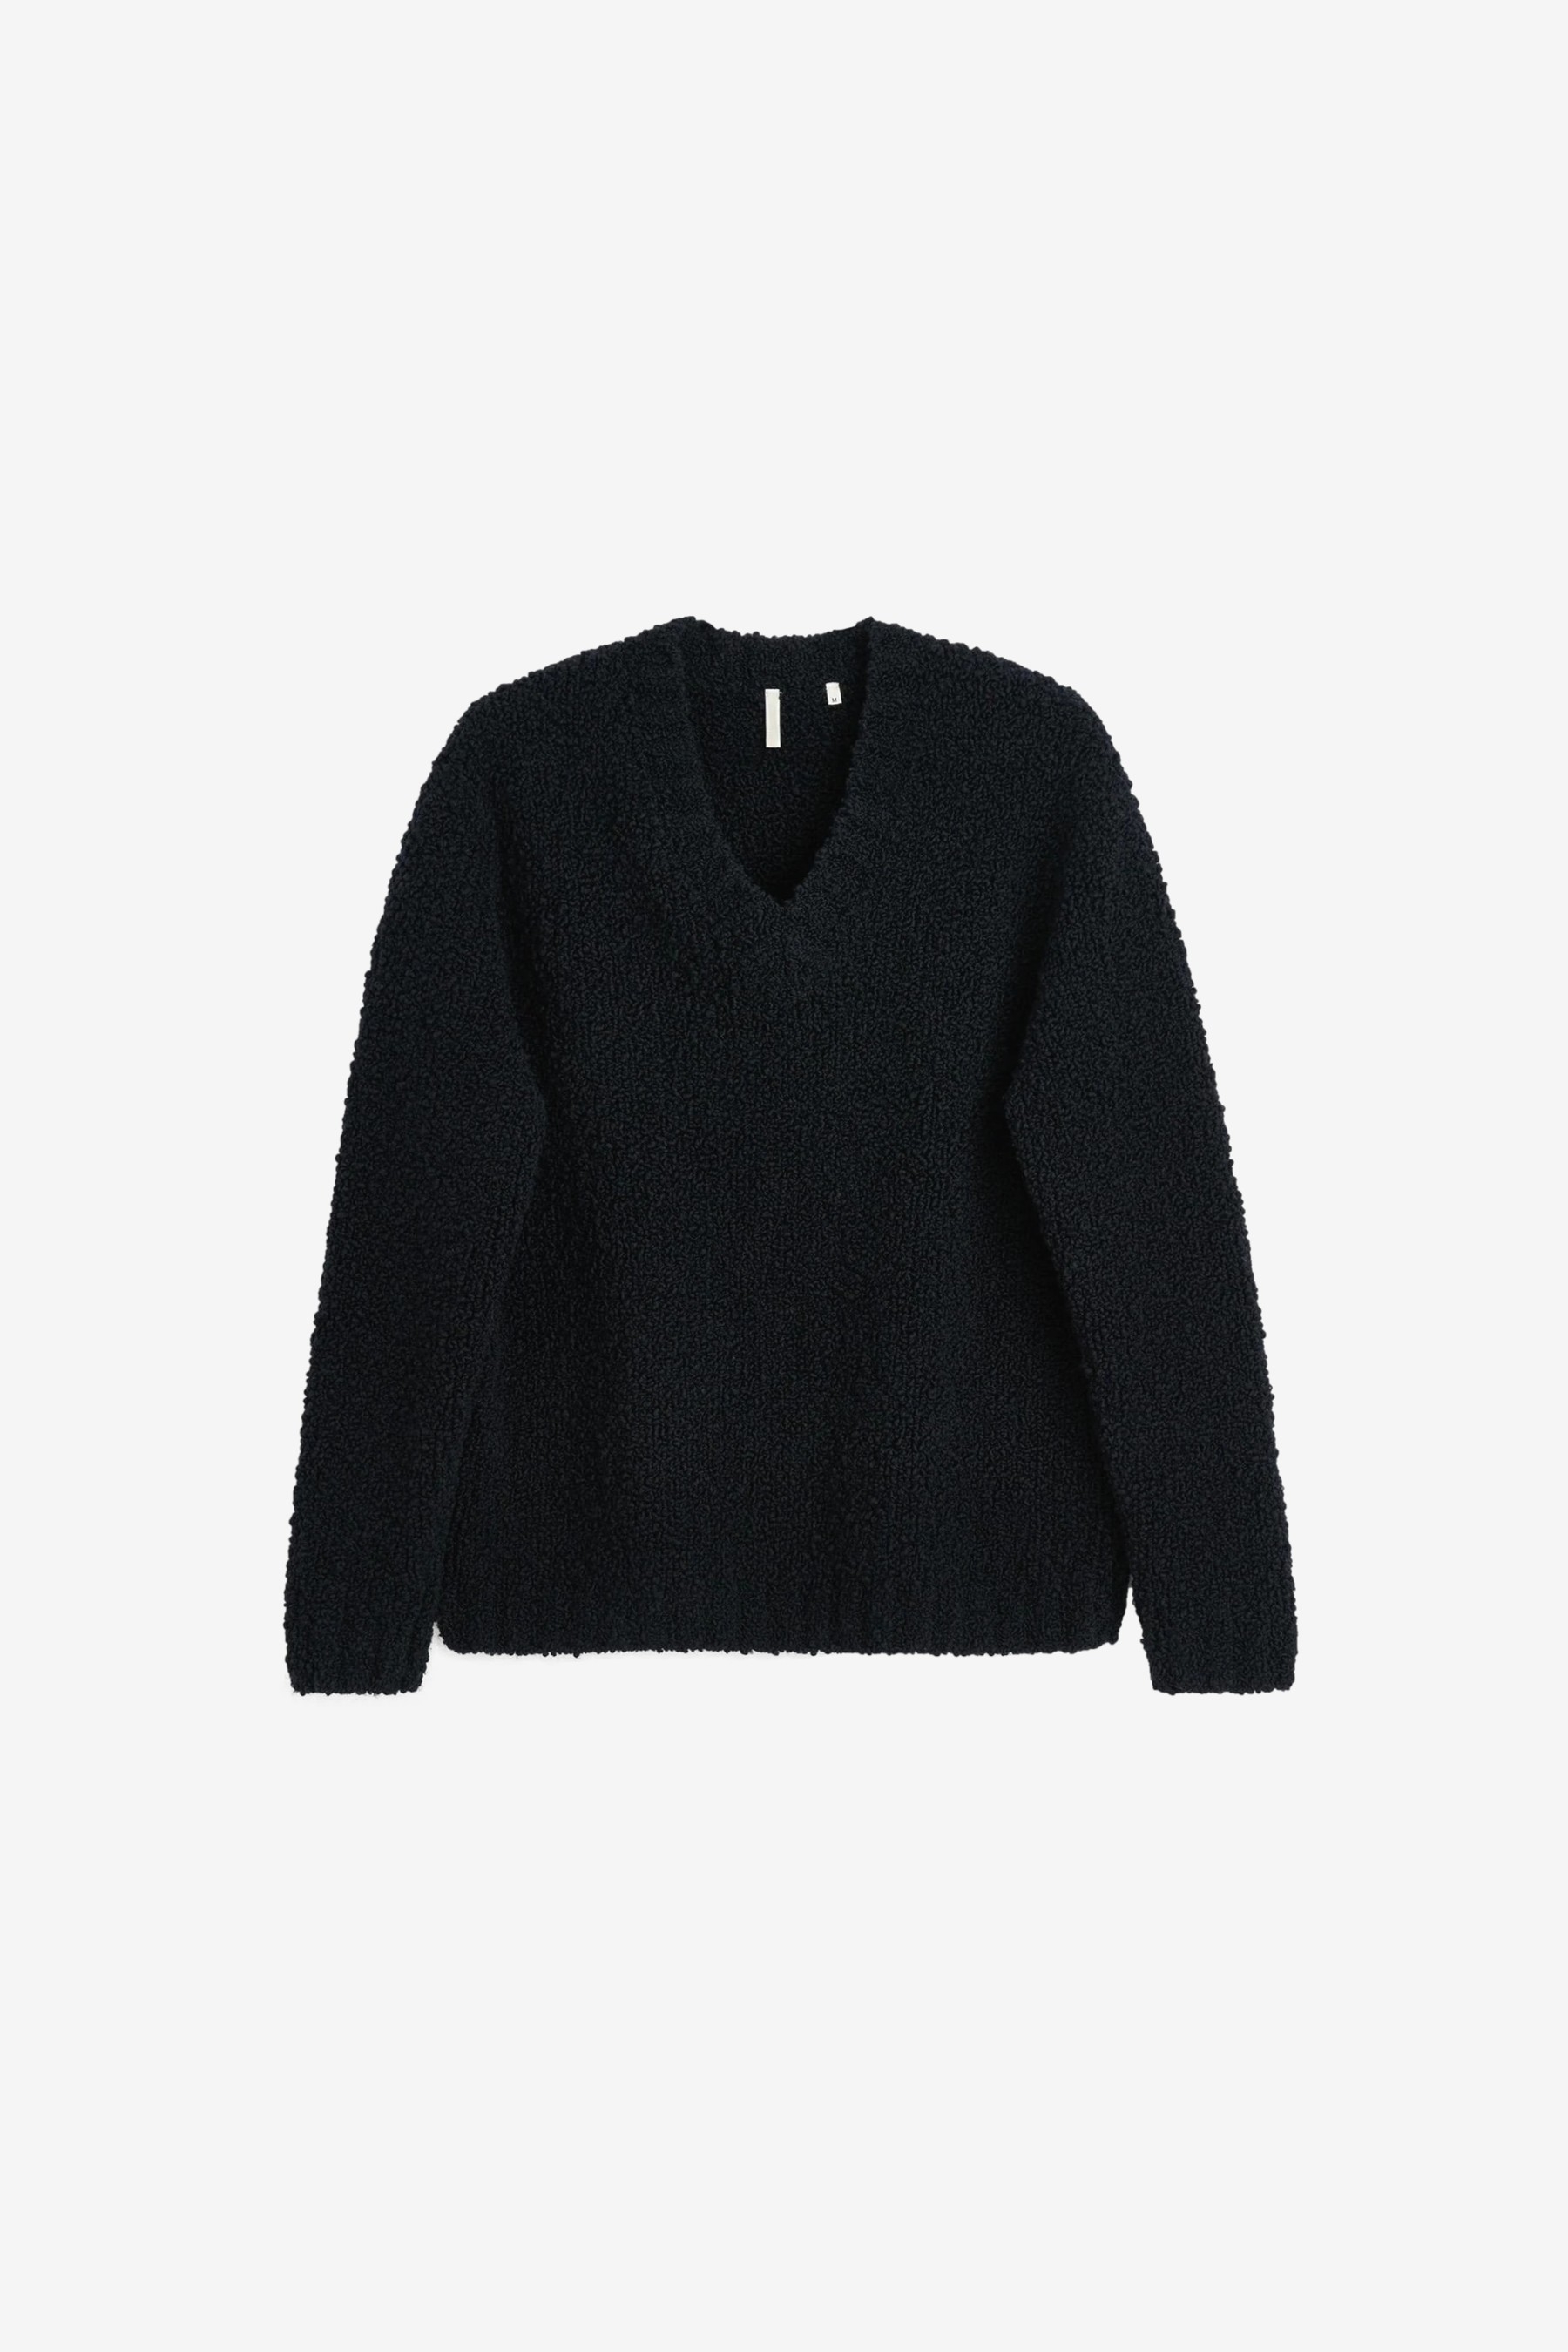 Aske Sweater in Black - Sunflower | Afura Store